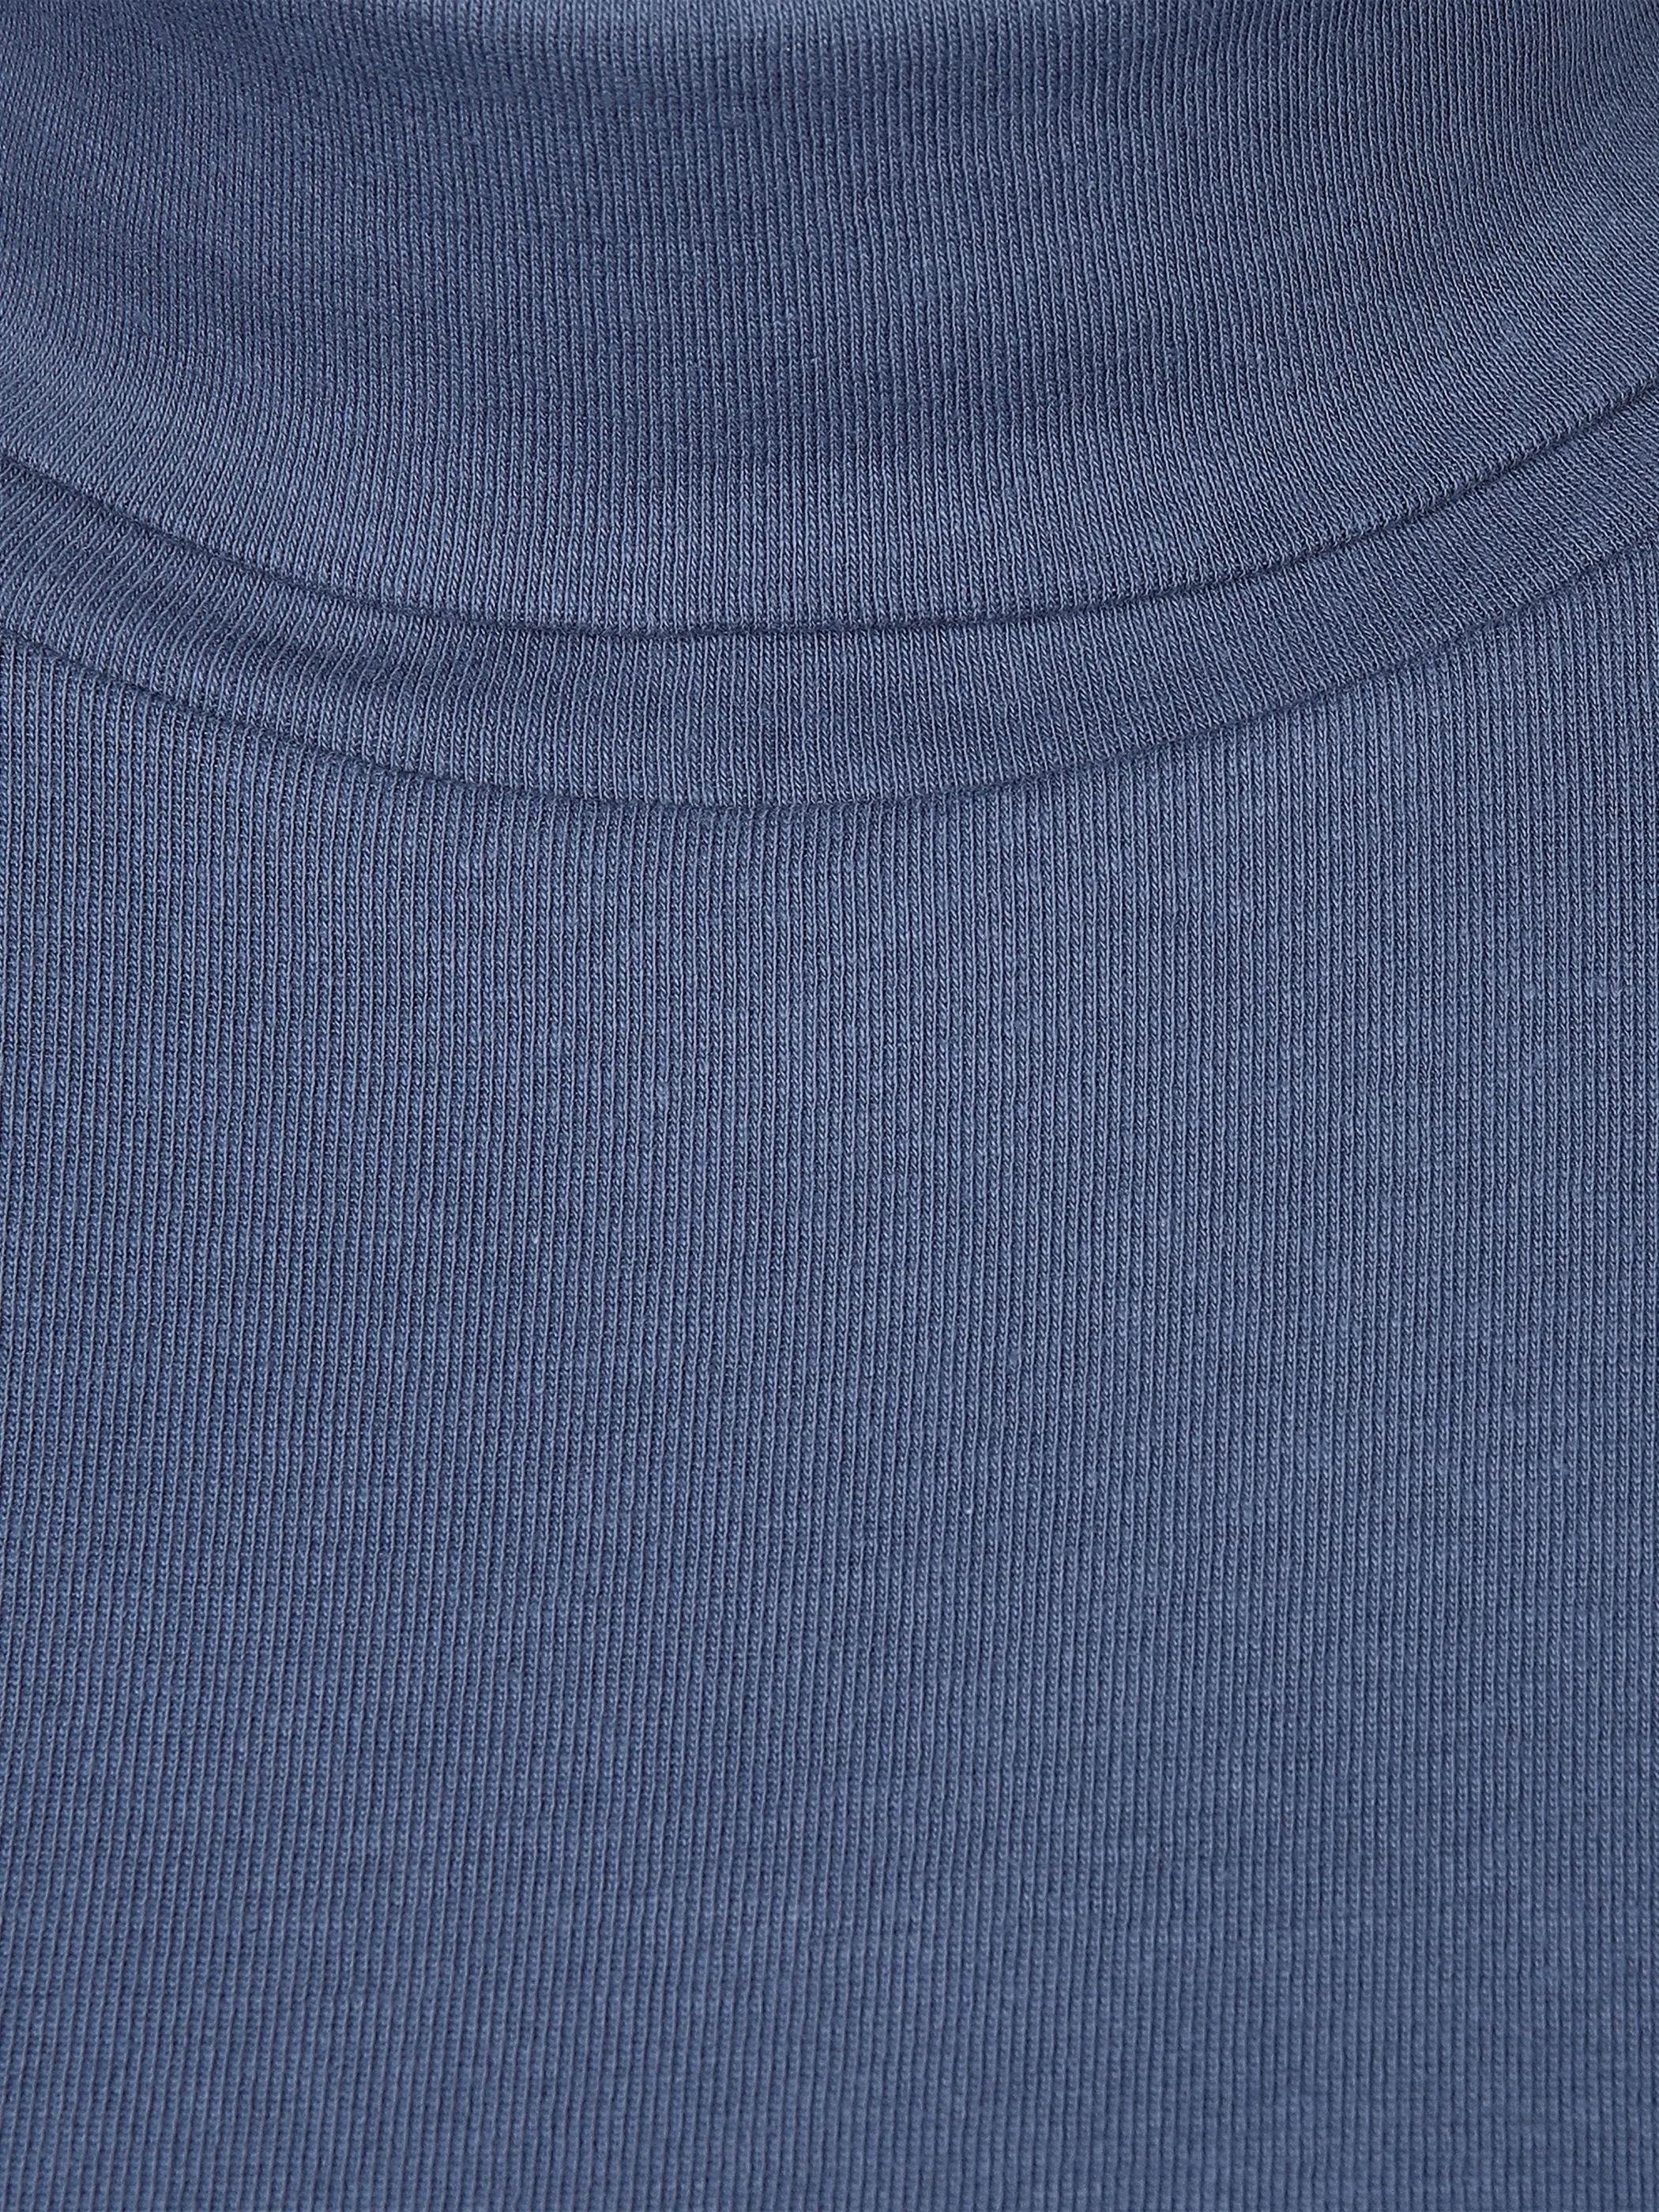 Tom Tailor 1032700 roll neck T-shirt Blau 869484 10904 3